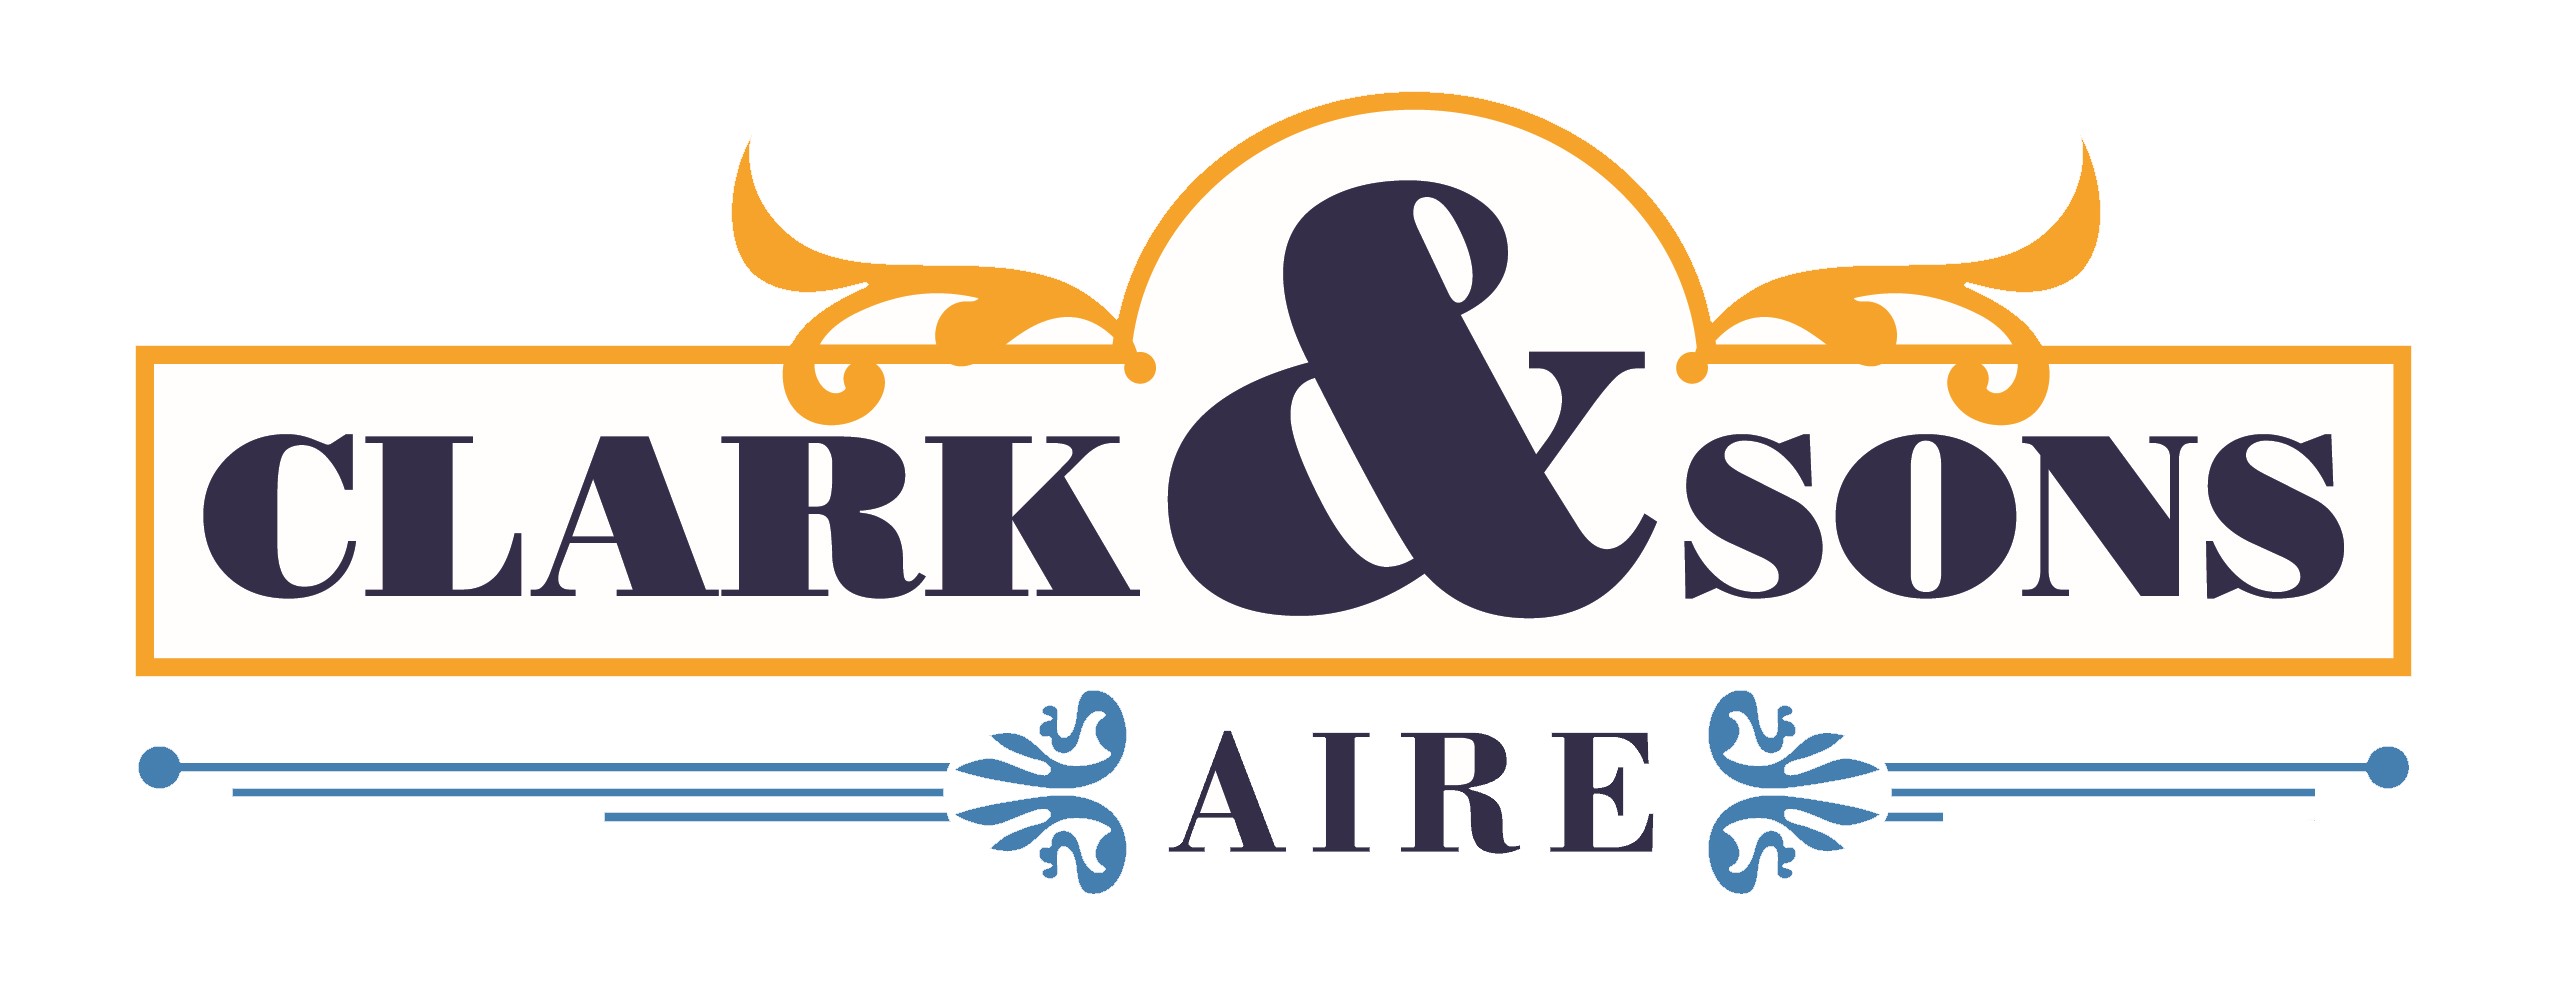 Clark & Sons Aire Inc.